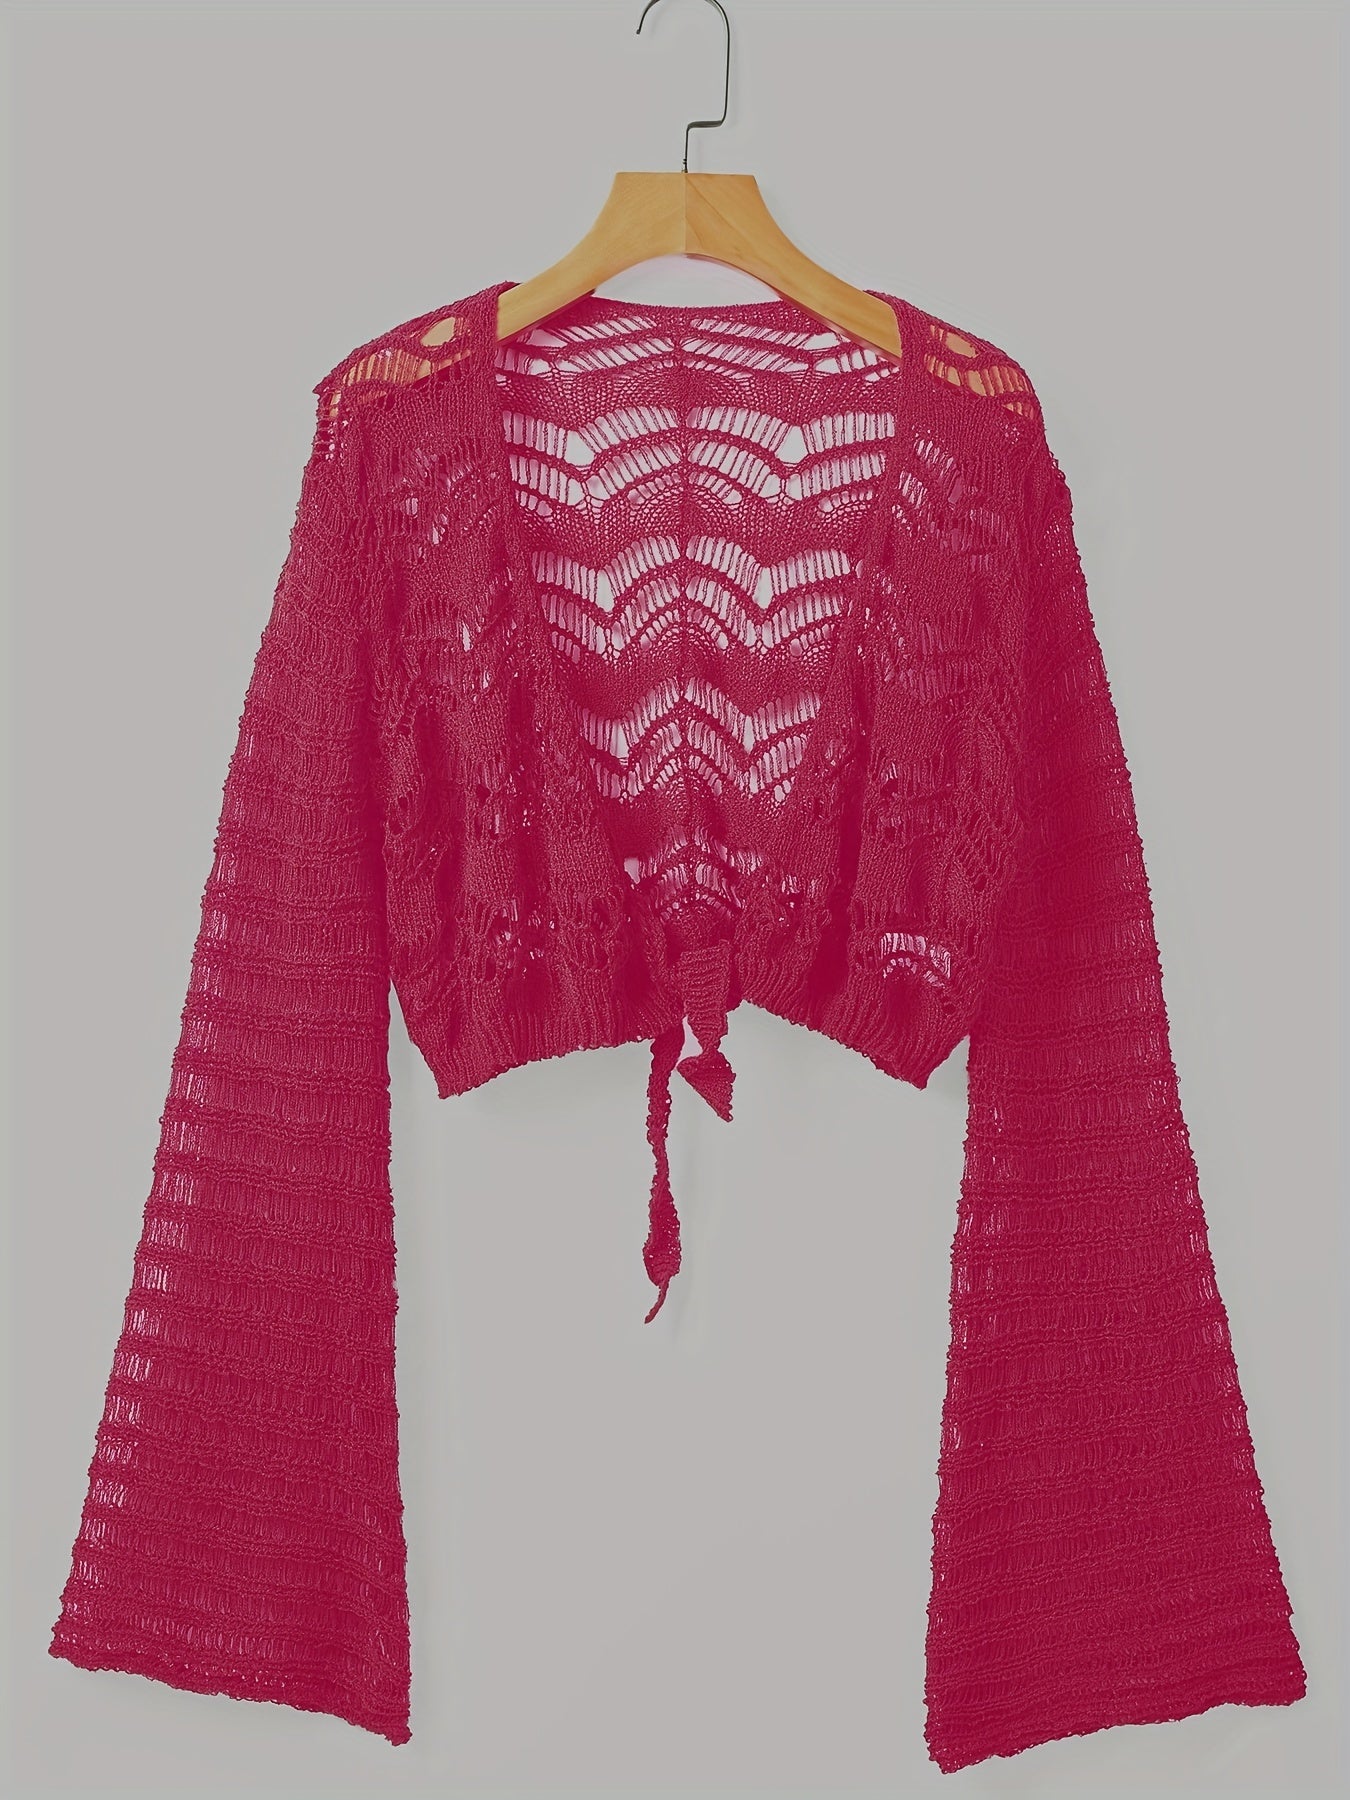 vlovelaw  vlovelaw  Crochet Cropped Knit Cardigan, Boho Flared Sleeve Solid Sweater, Women's Clothing